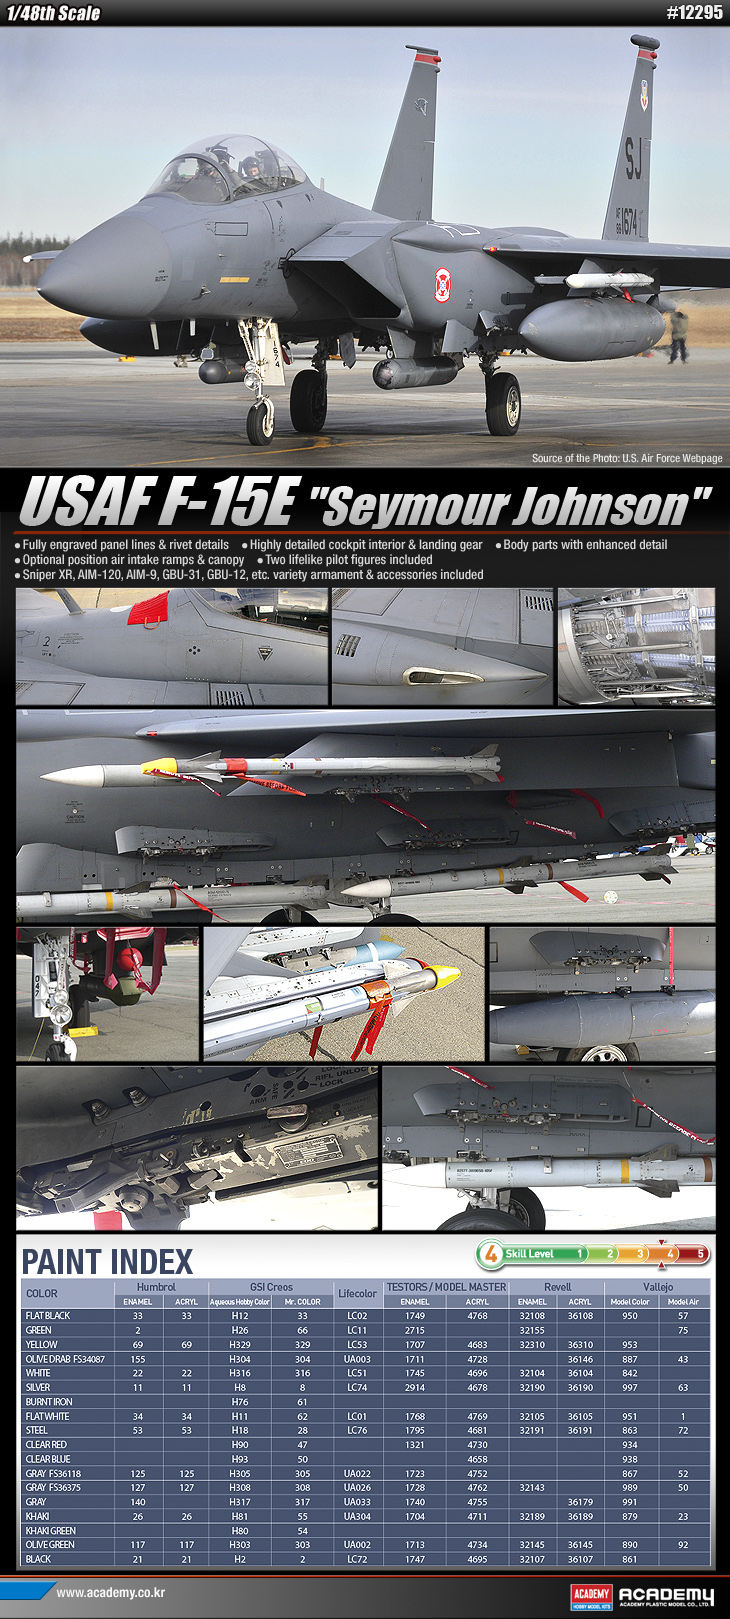 12295_F-15E_Seymour_Johnson_kor_main_210718.jpg